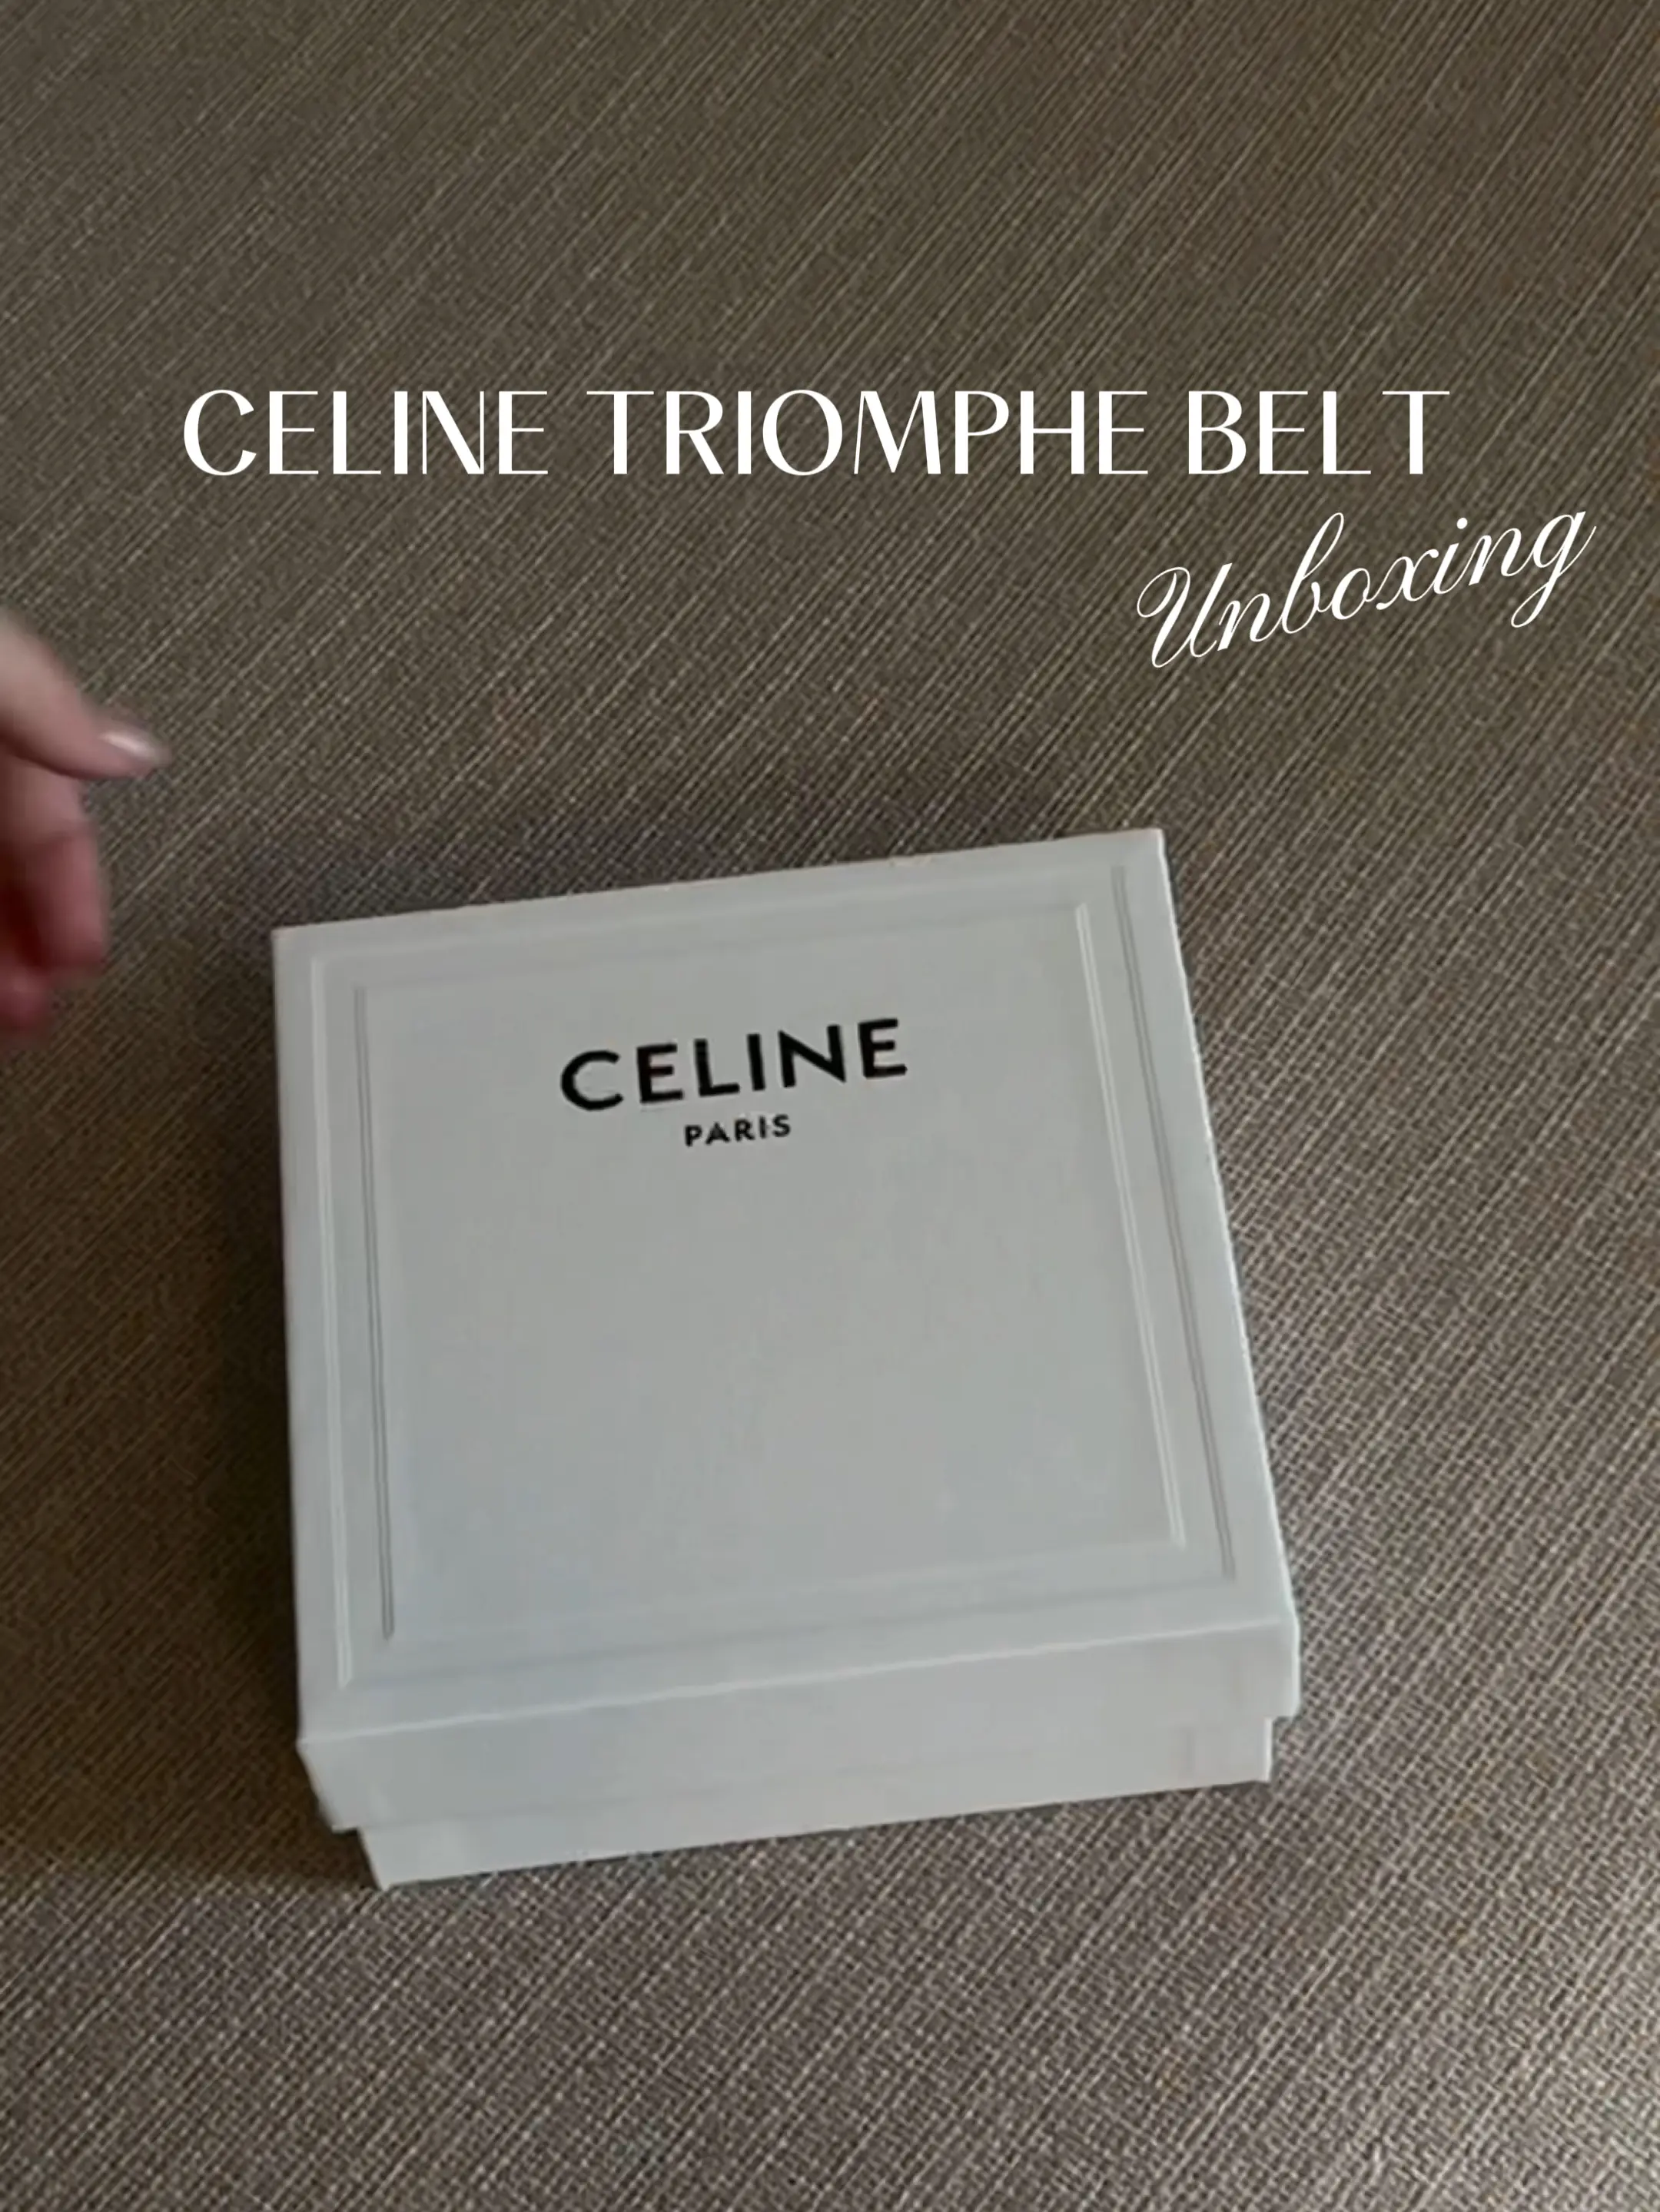 Celine Triomphe Belt  is it worth it? (unboxing & review) 